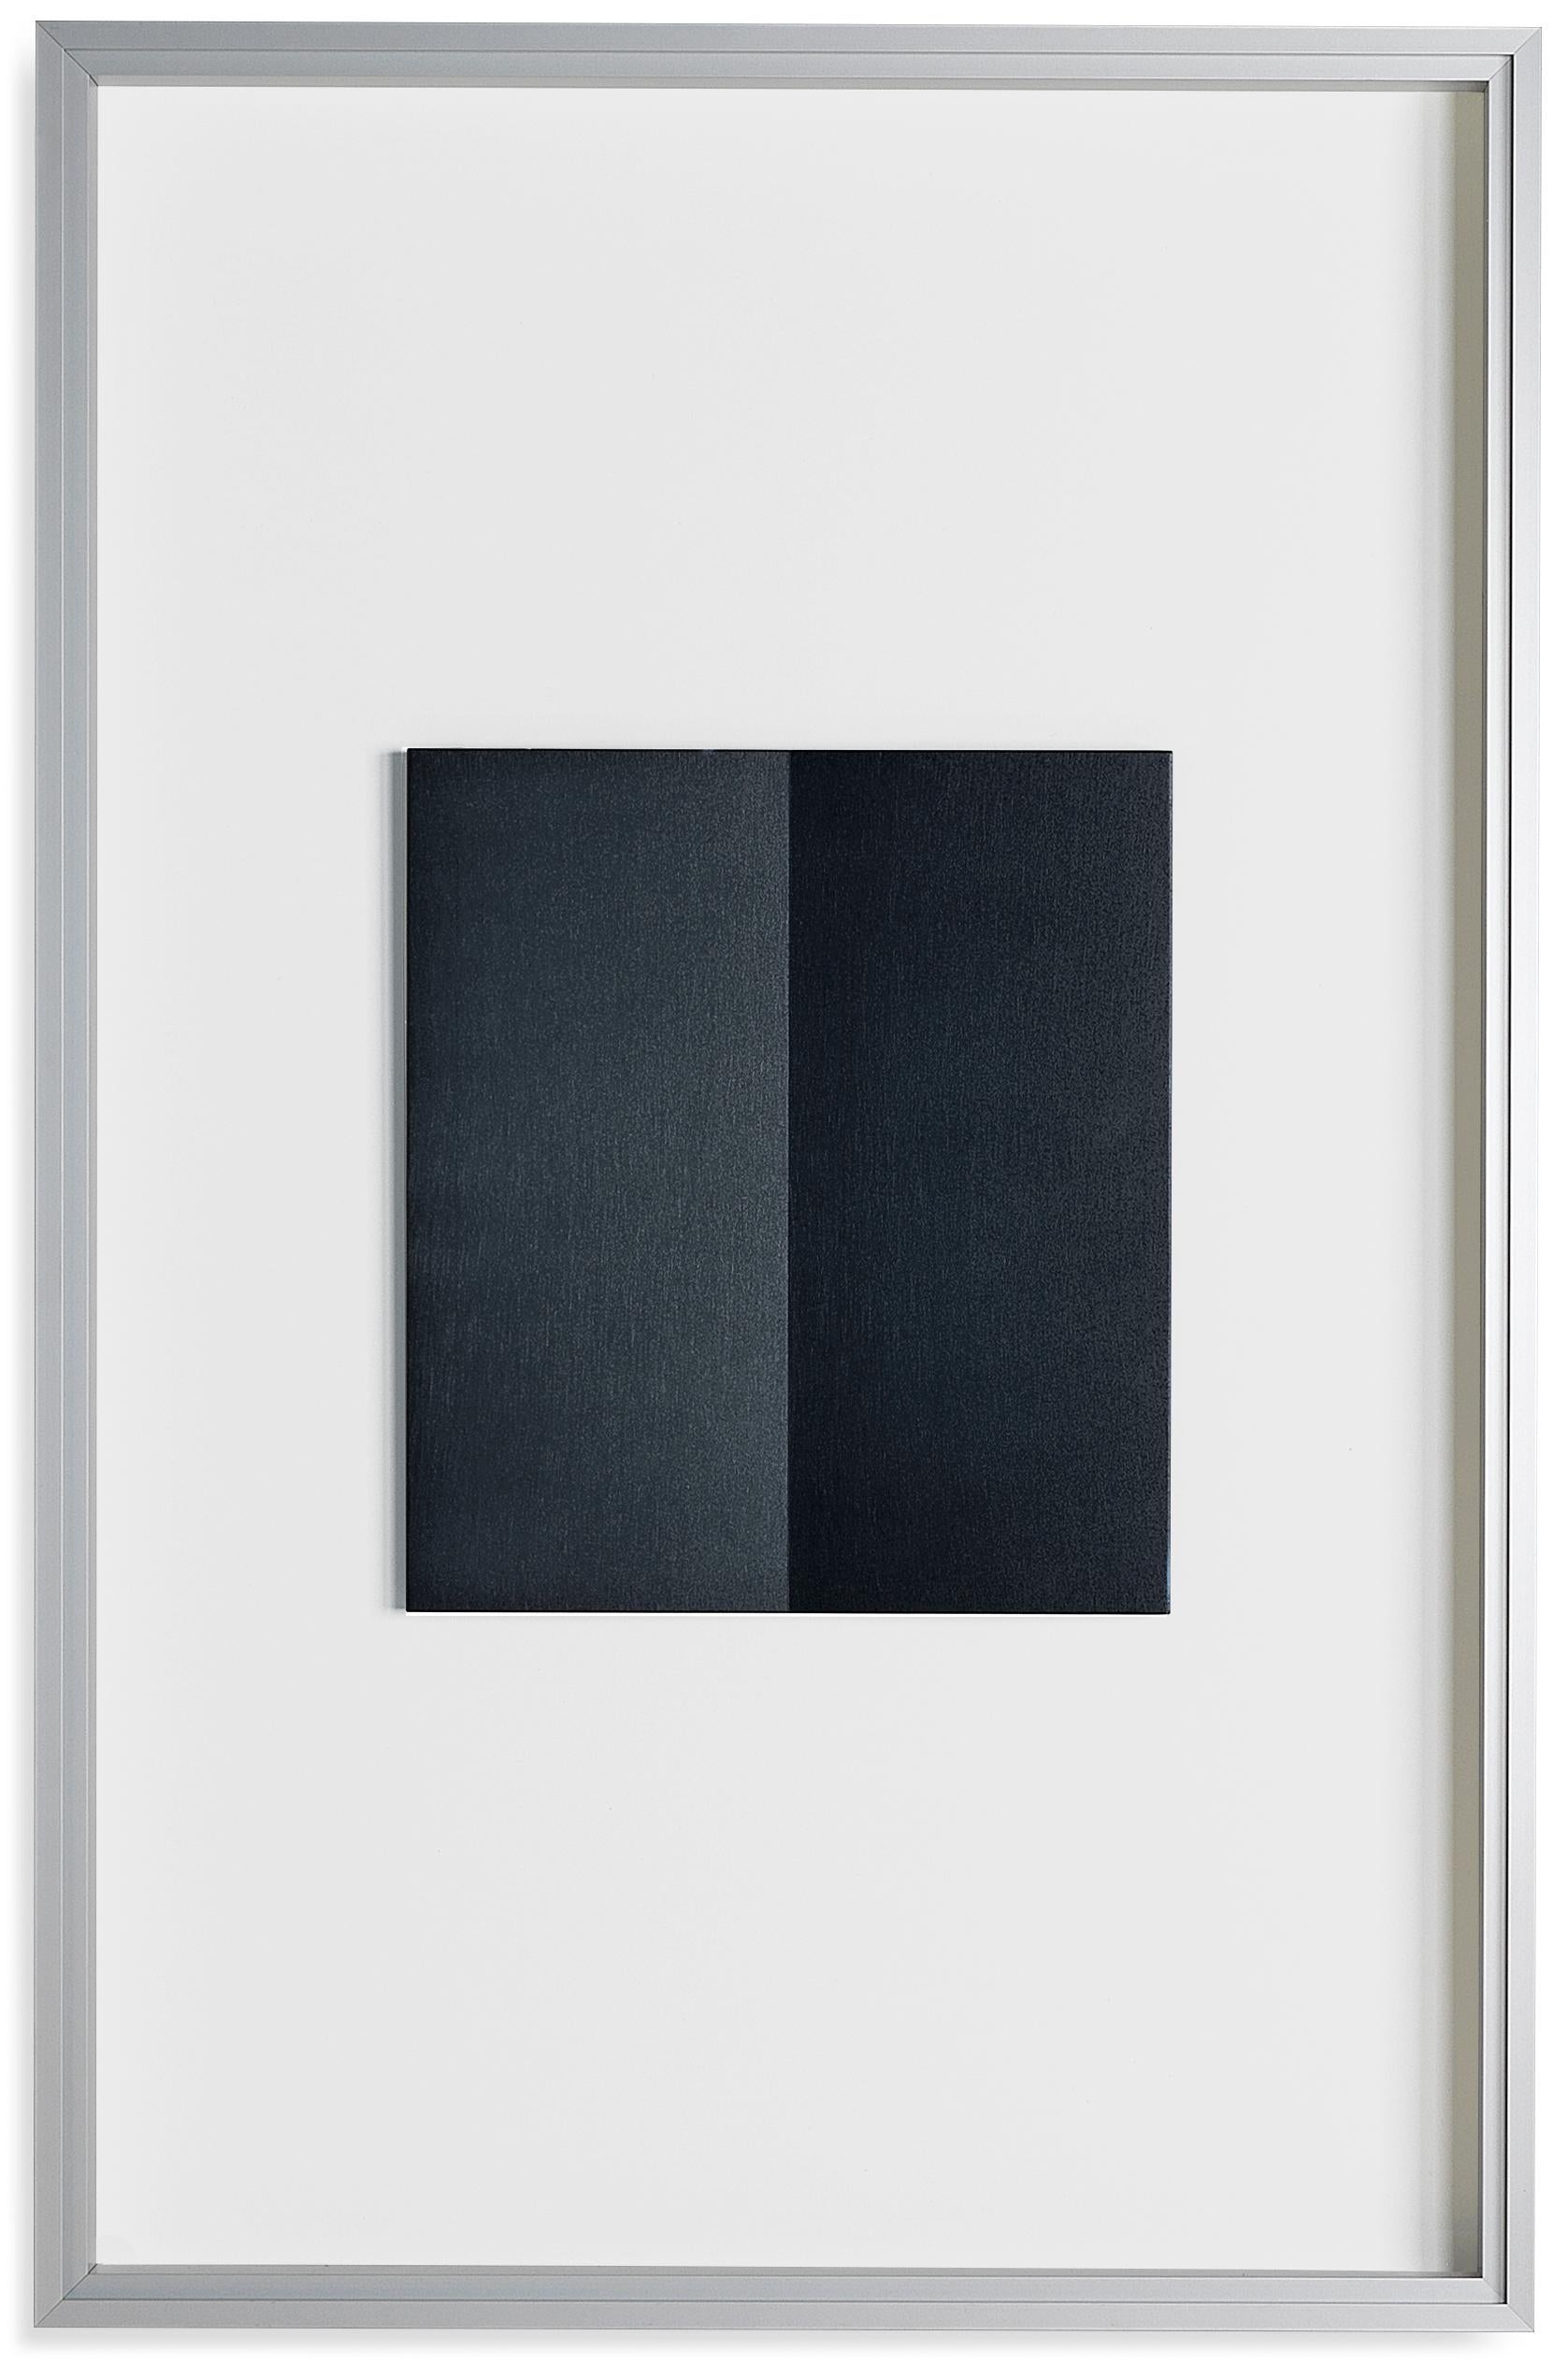 Keiji Takeuchi Abstract Sculpture - Phenomena, Black 01. Limited Edition 1st of 20 pieces.